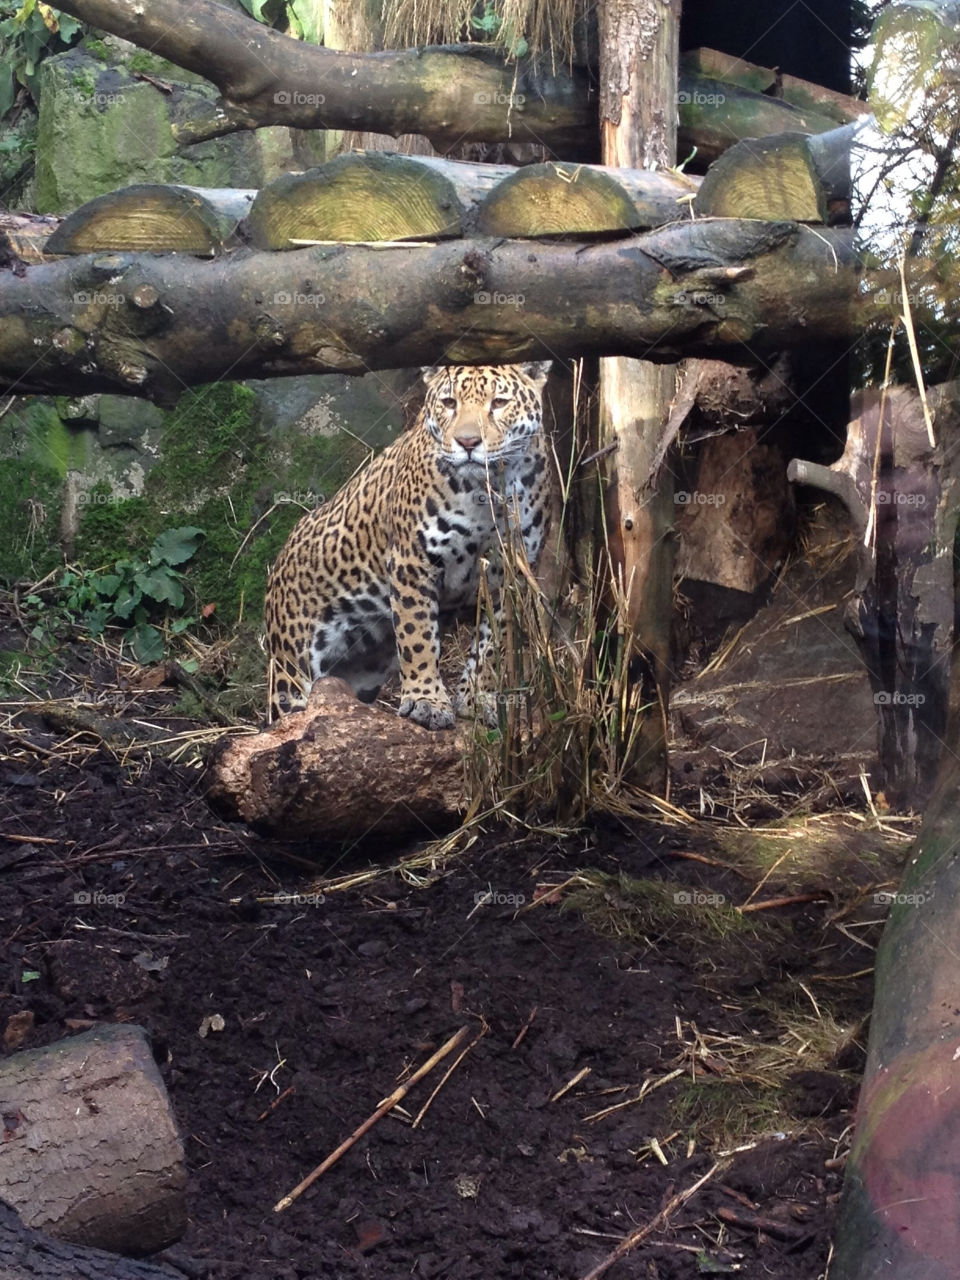 edinburgh zoo zoo jaguar big cat by iain.hanna